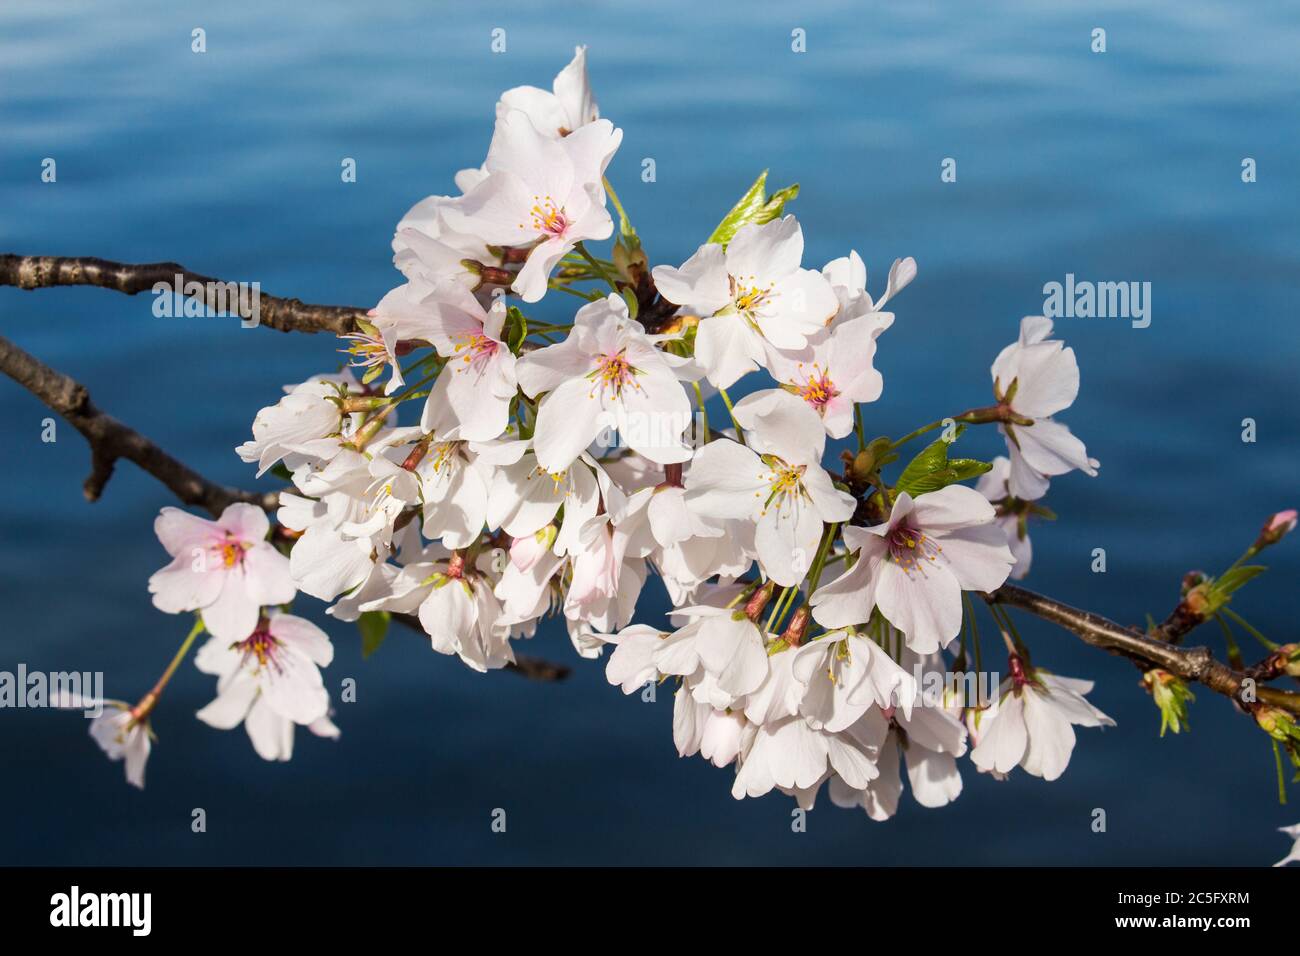 Group of white cherry blossoms / Japanese sakura / Prunus serrulata with deep blue water of Tidal Basin in background, Washington, D.C., United States Stock Photo